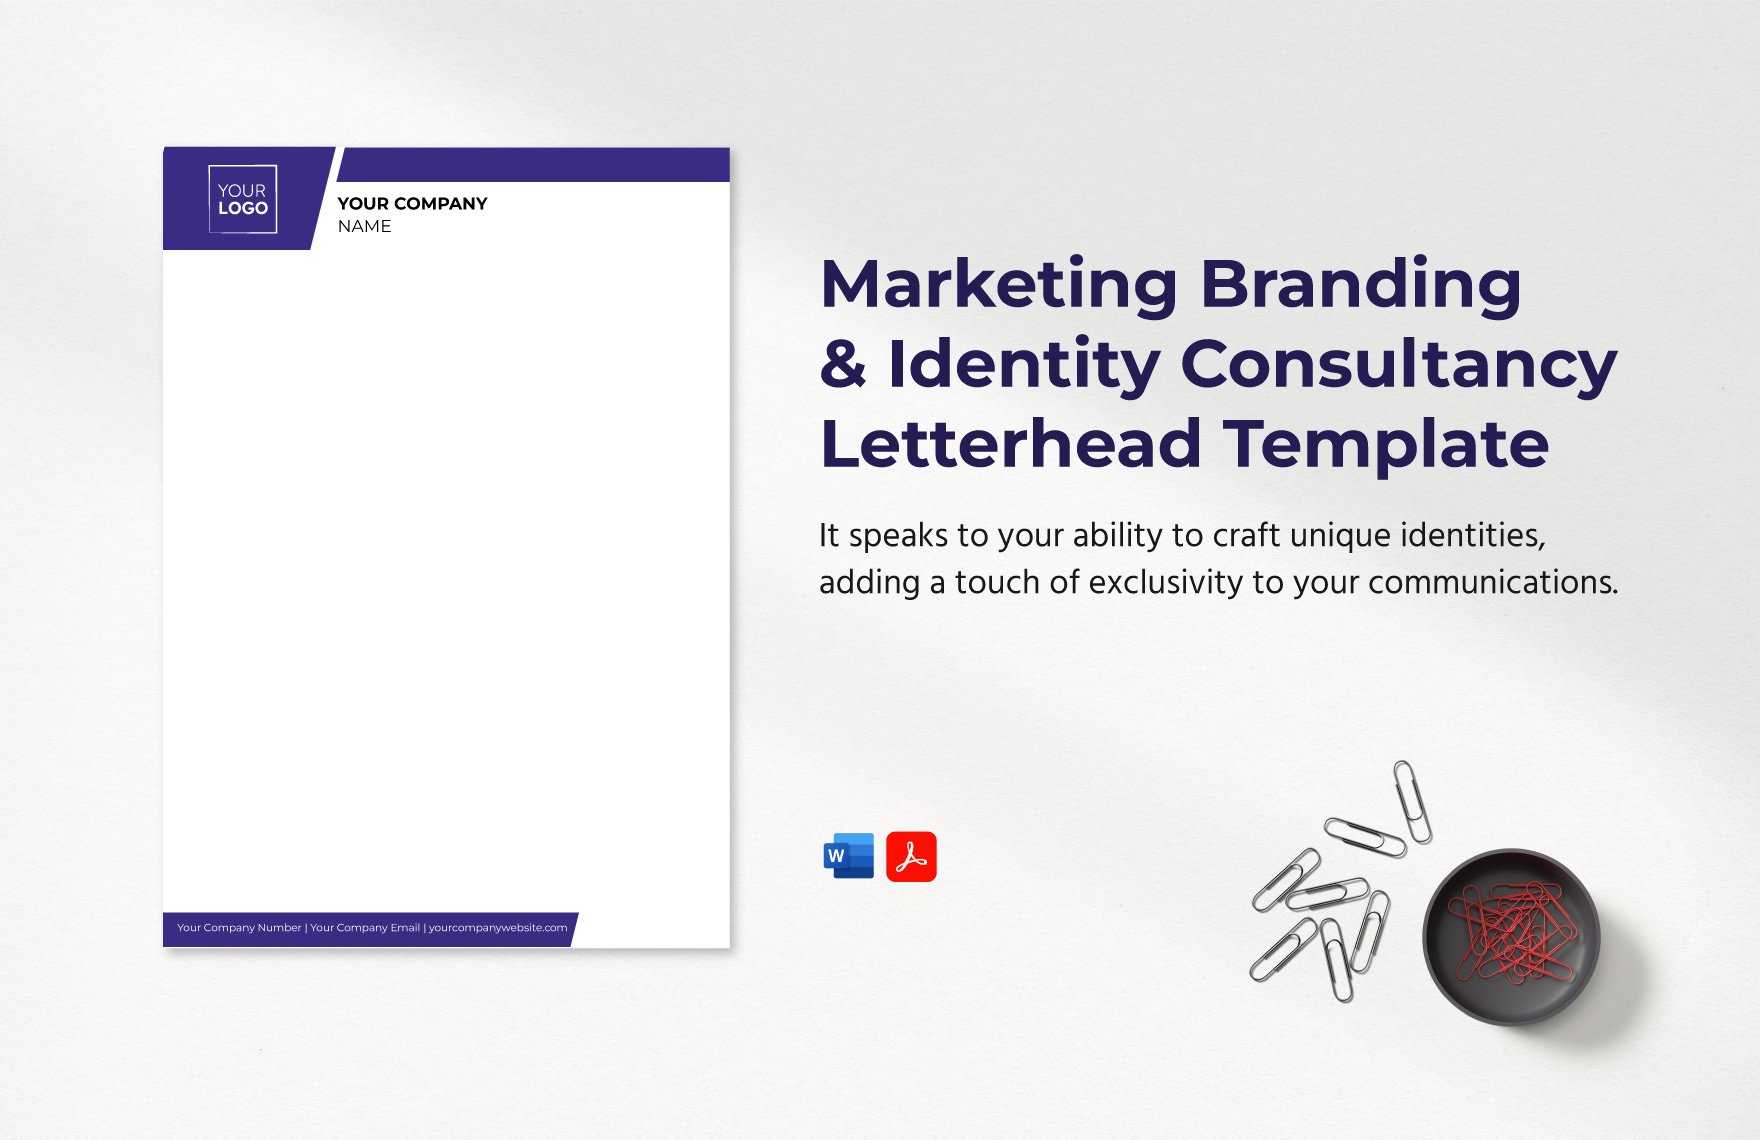 Marketing Branding & Identity Consultancy Letterhead Template